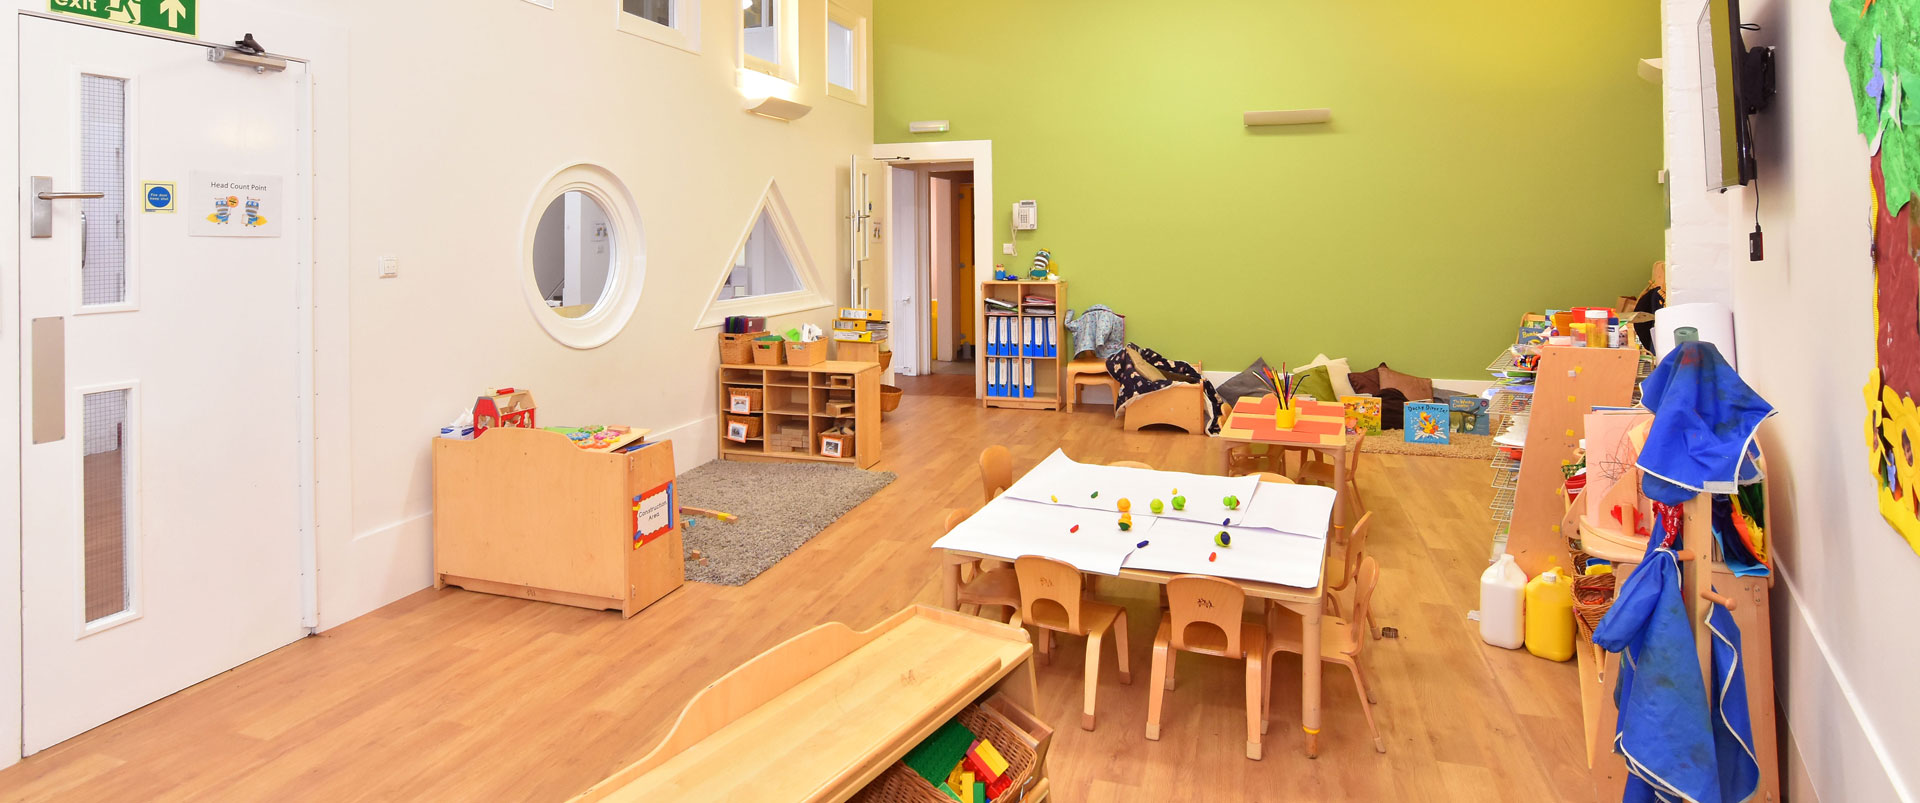 Fulham Day Nursery and Preschool